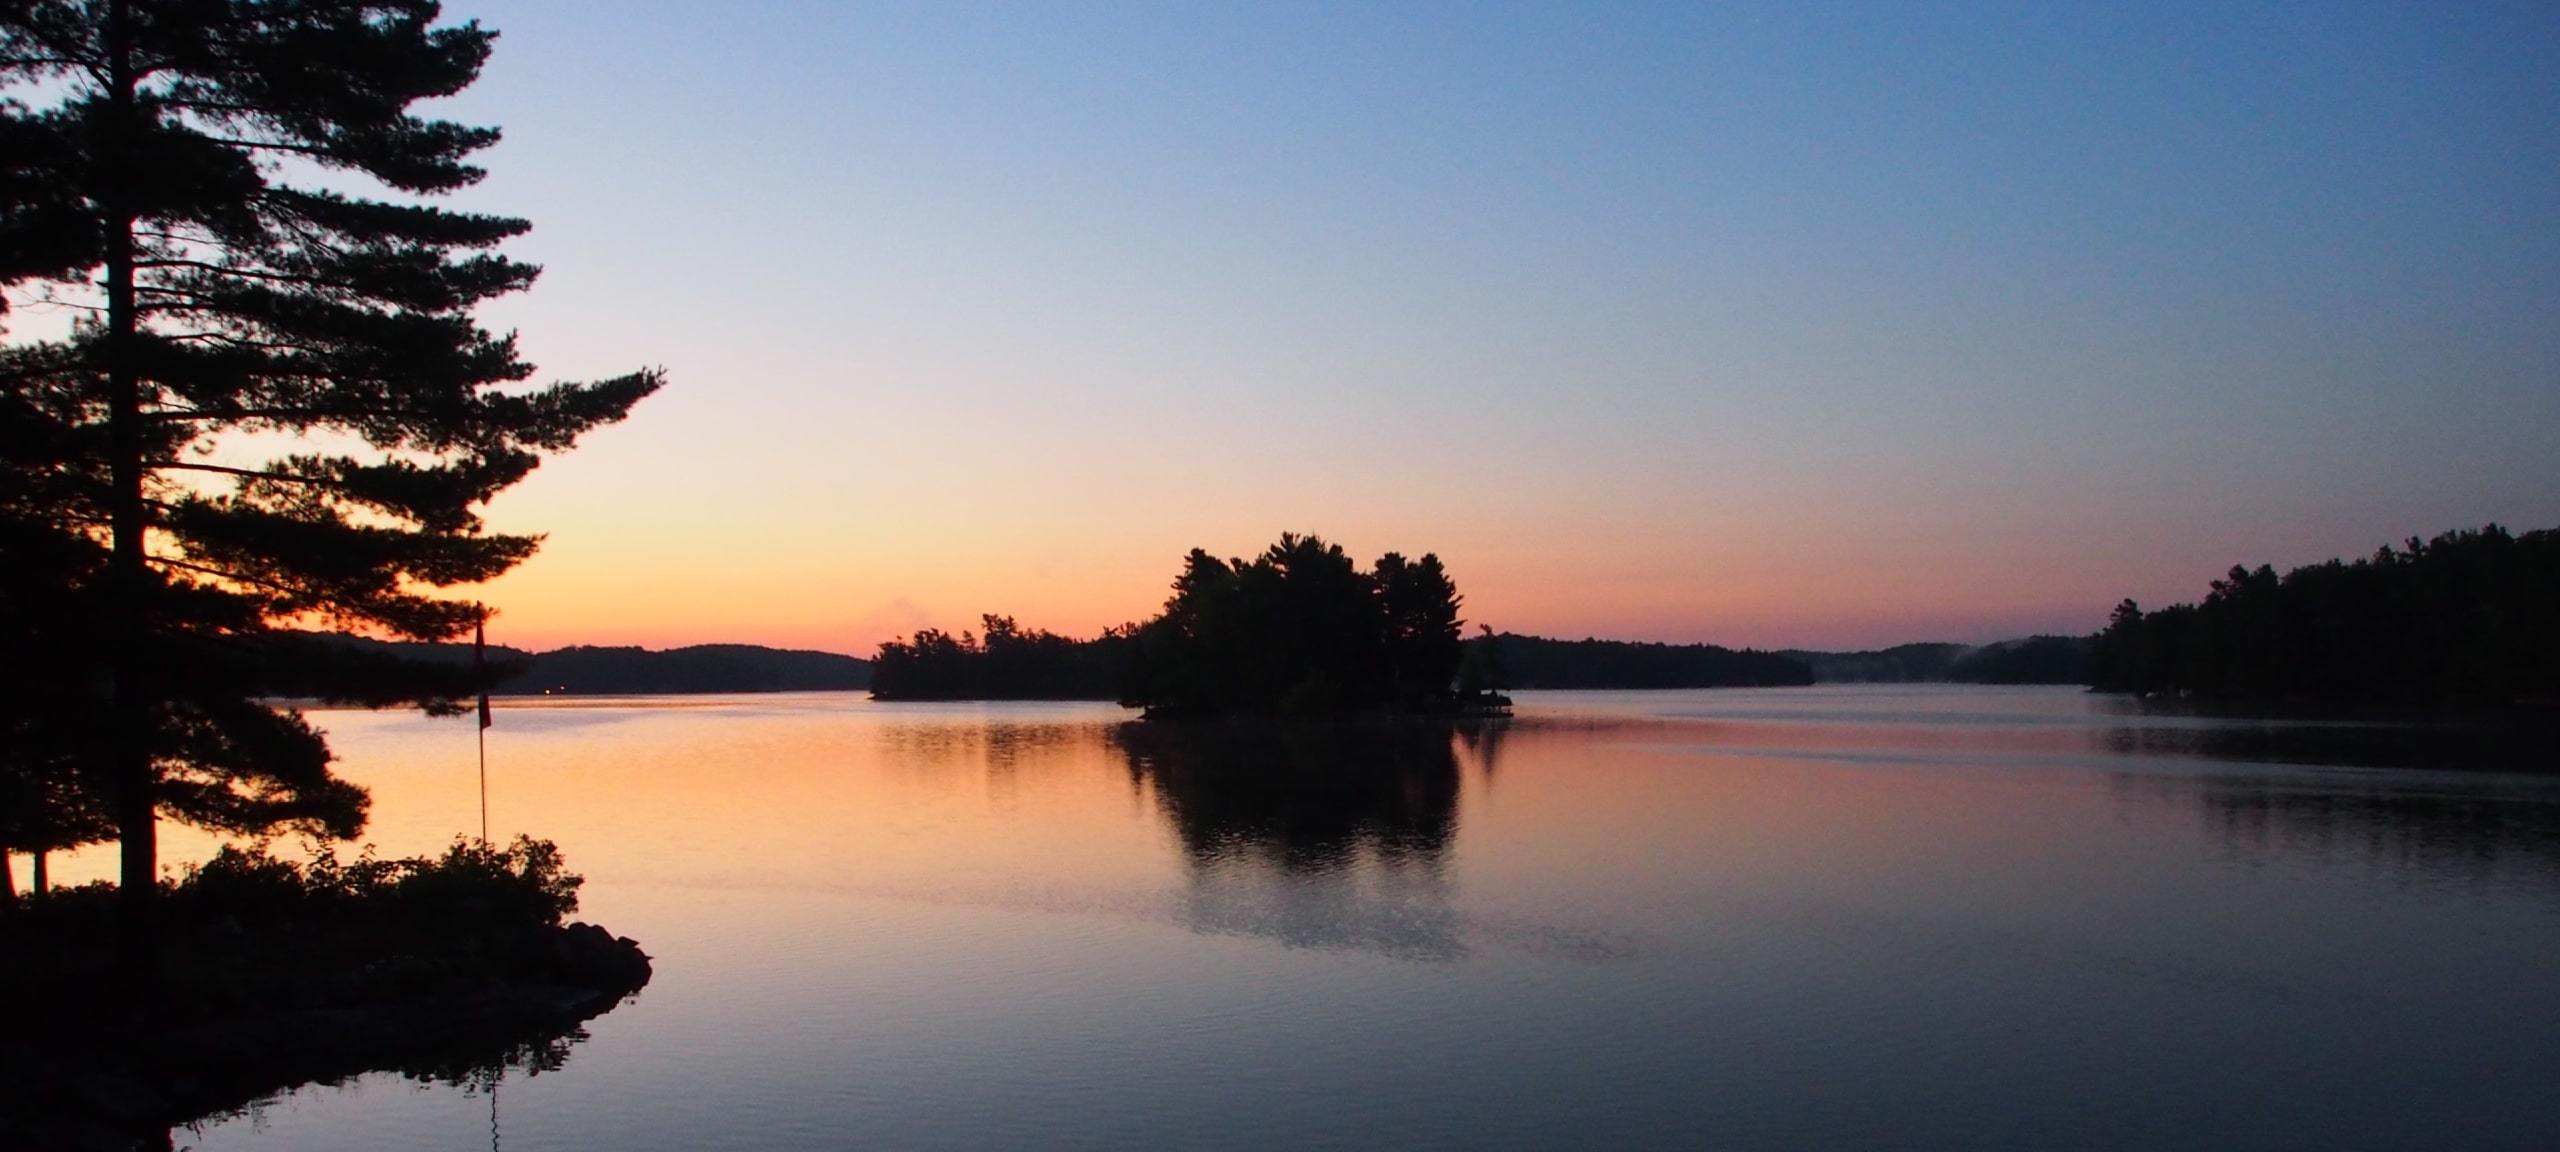 Sunset over Lake Joseph islands near MacTier, ON